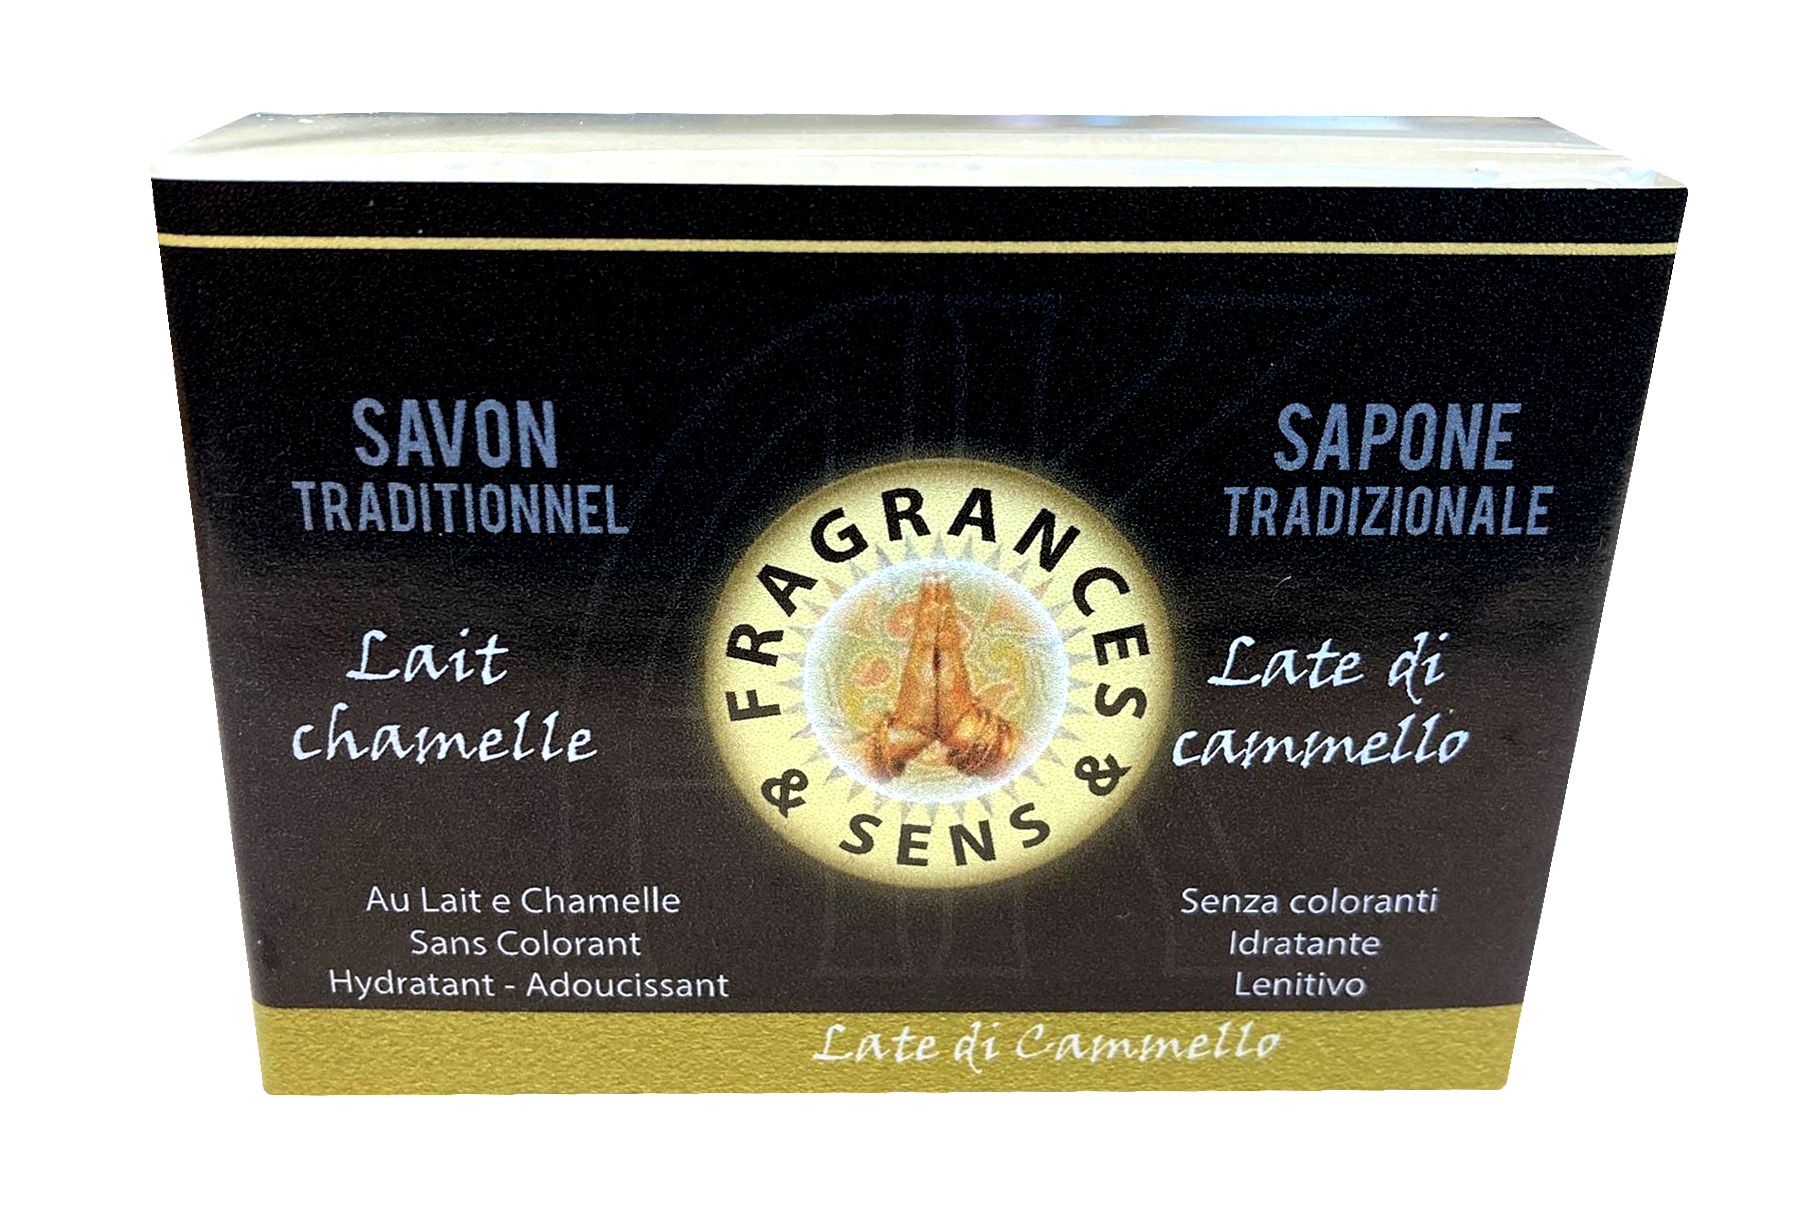 Sapone Fragrances & Sens - Latte di cammella 100g